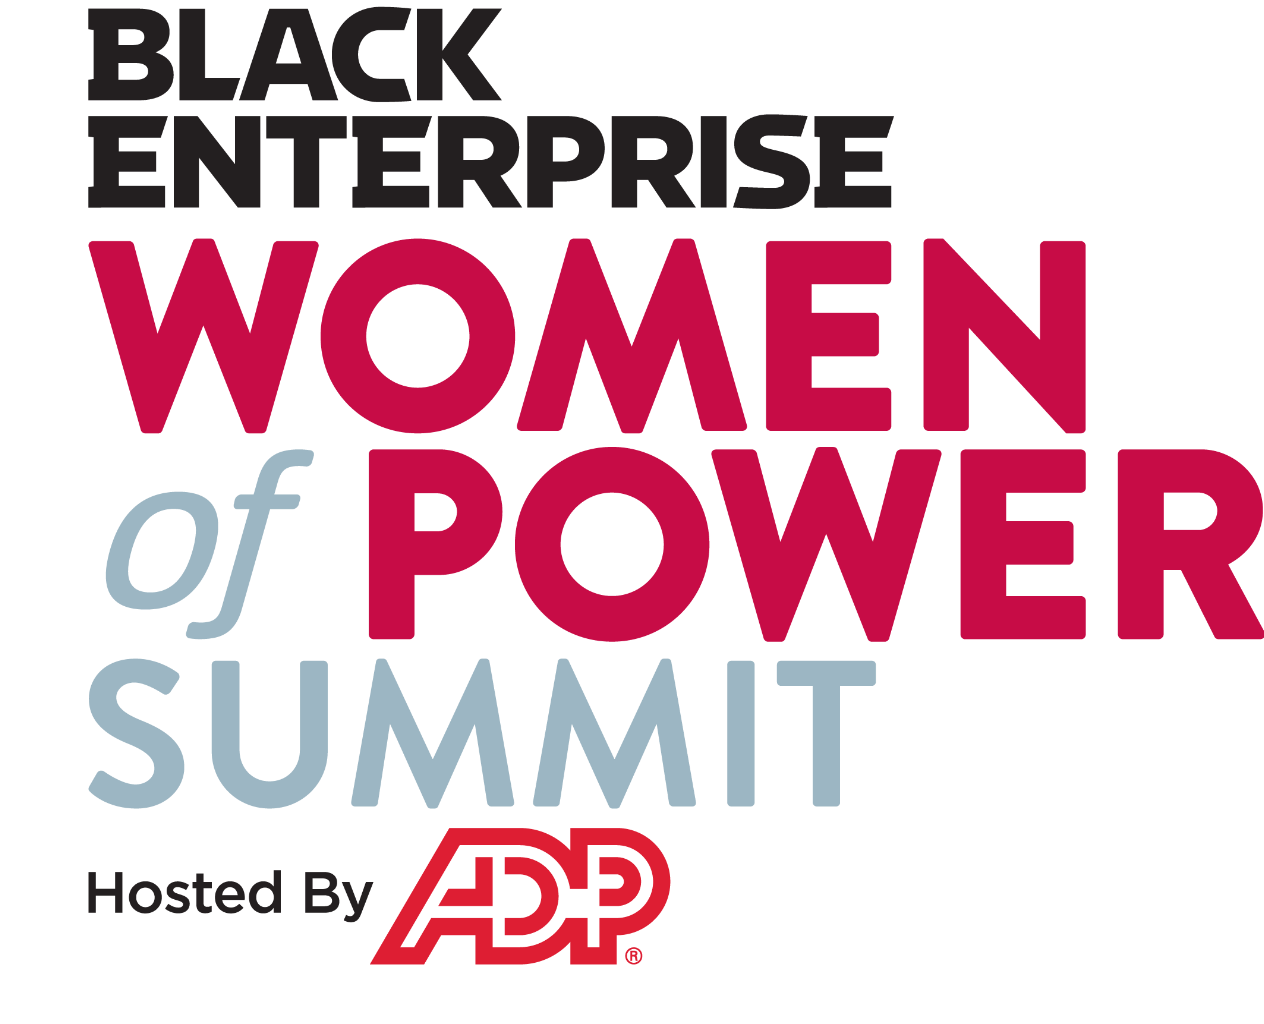 Black Enterprise Women of Power Summit Logo